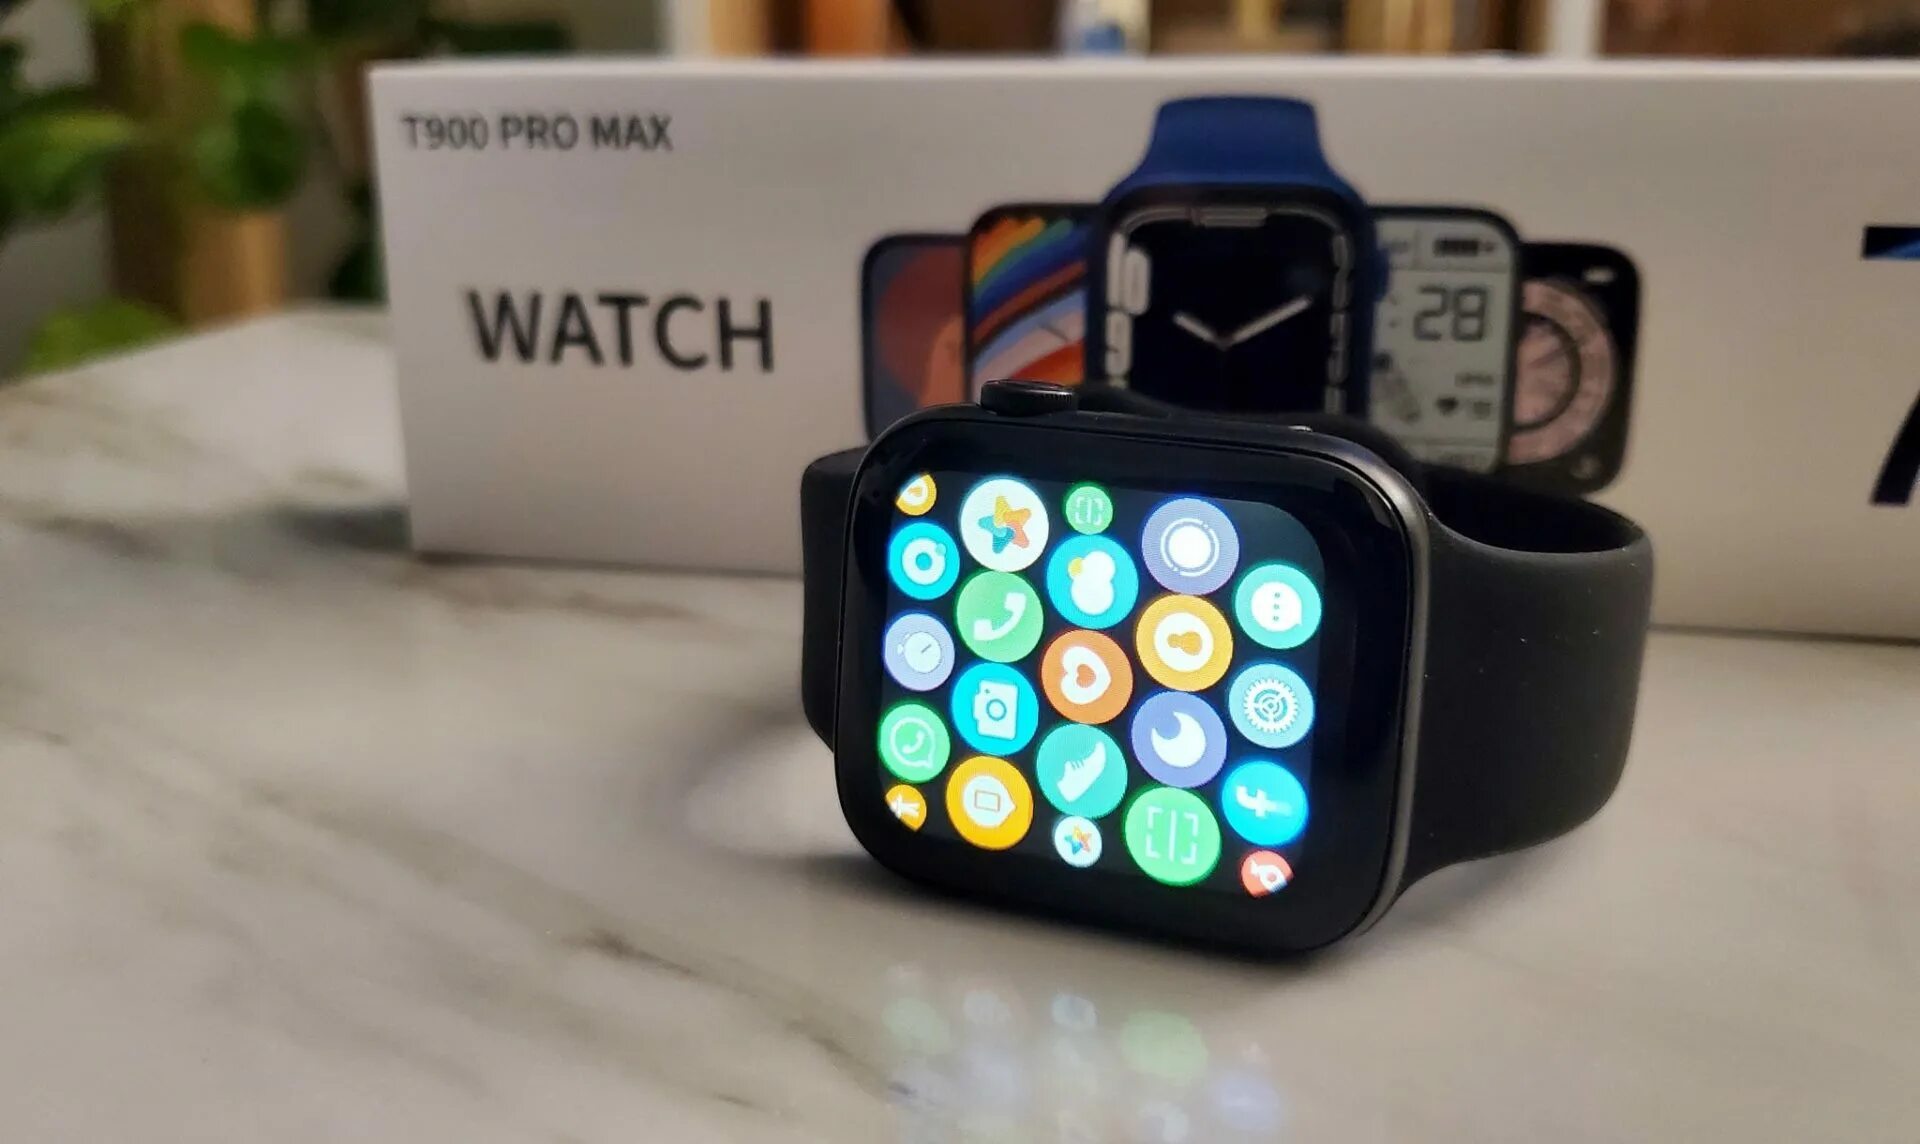 Часы макс 7. Smart watch 7 t900 Pro Max. Смарт часы t900 Pro Max 8. T900 Pro Max Smart watch 9. T900 Pro Max 7 часы.